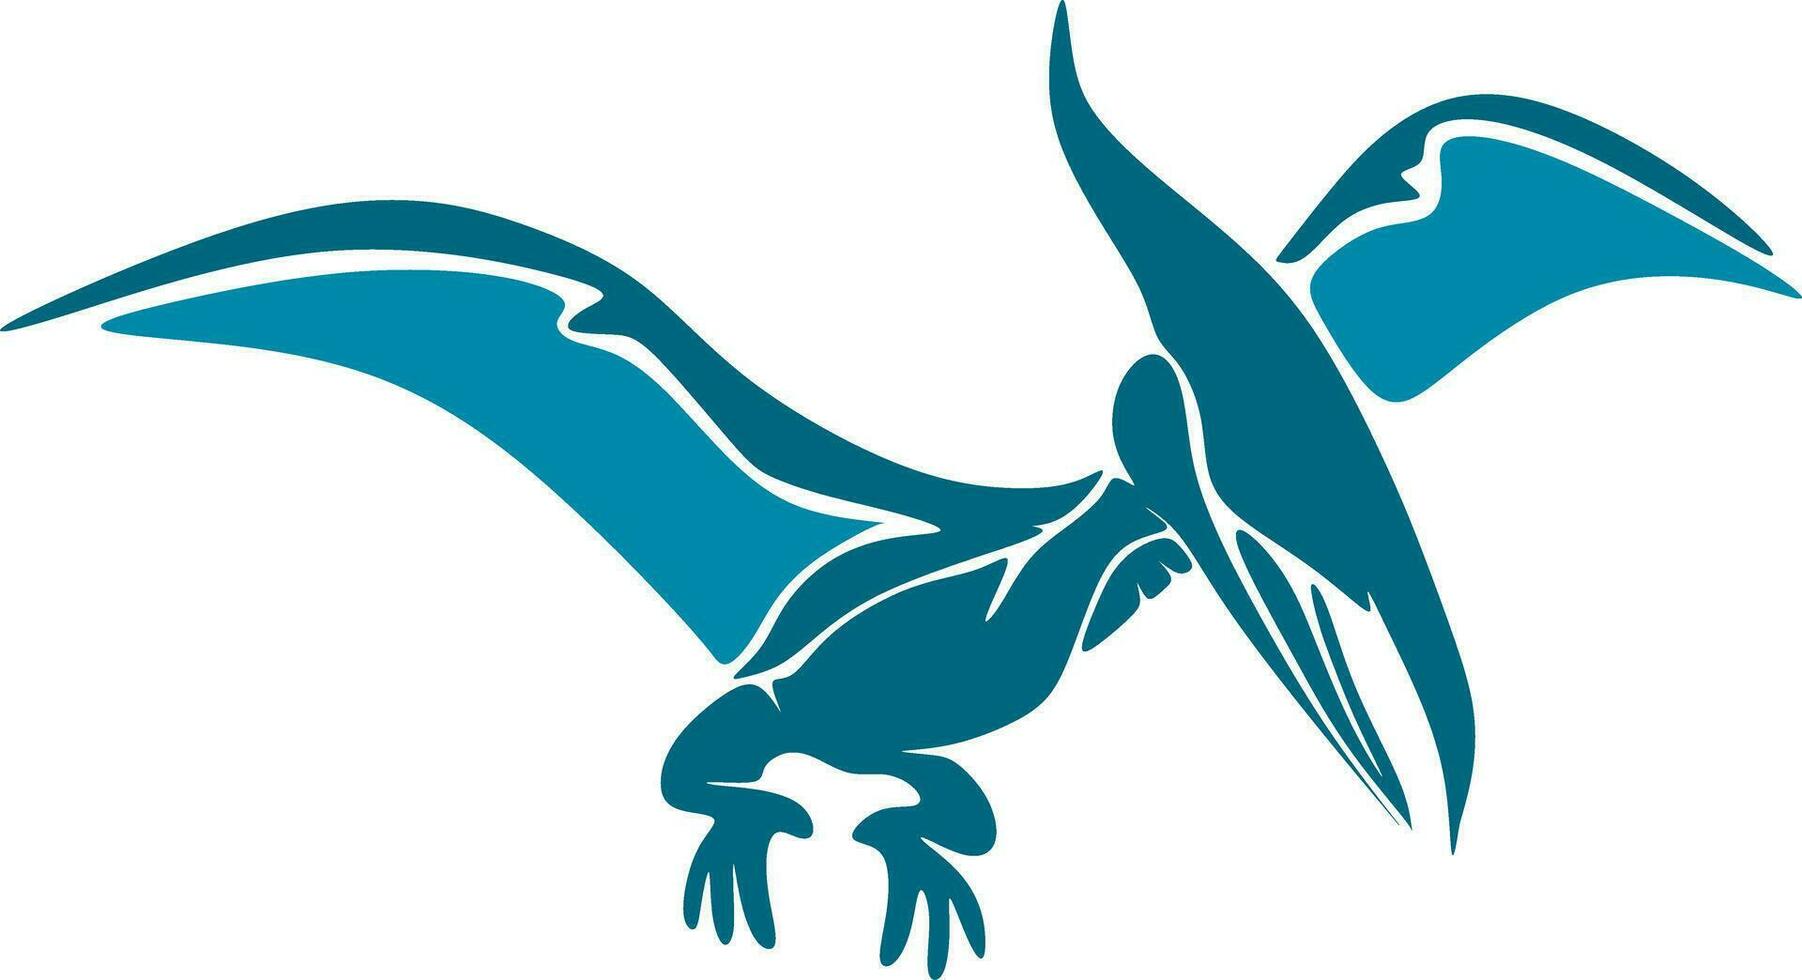 abstrakt Karikatur Illustration. ein Pteranodon das größten fliegend Reptil. vektor